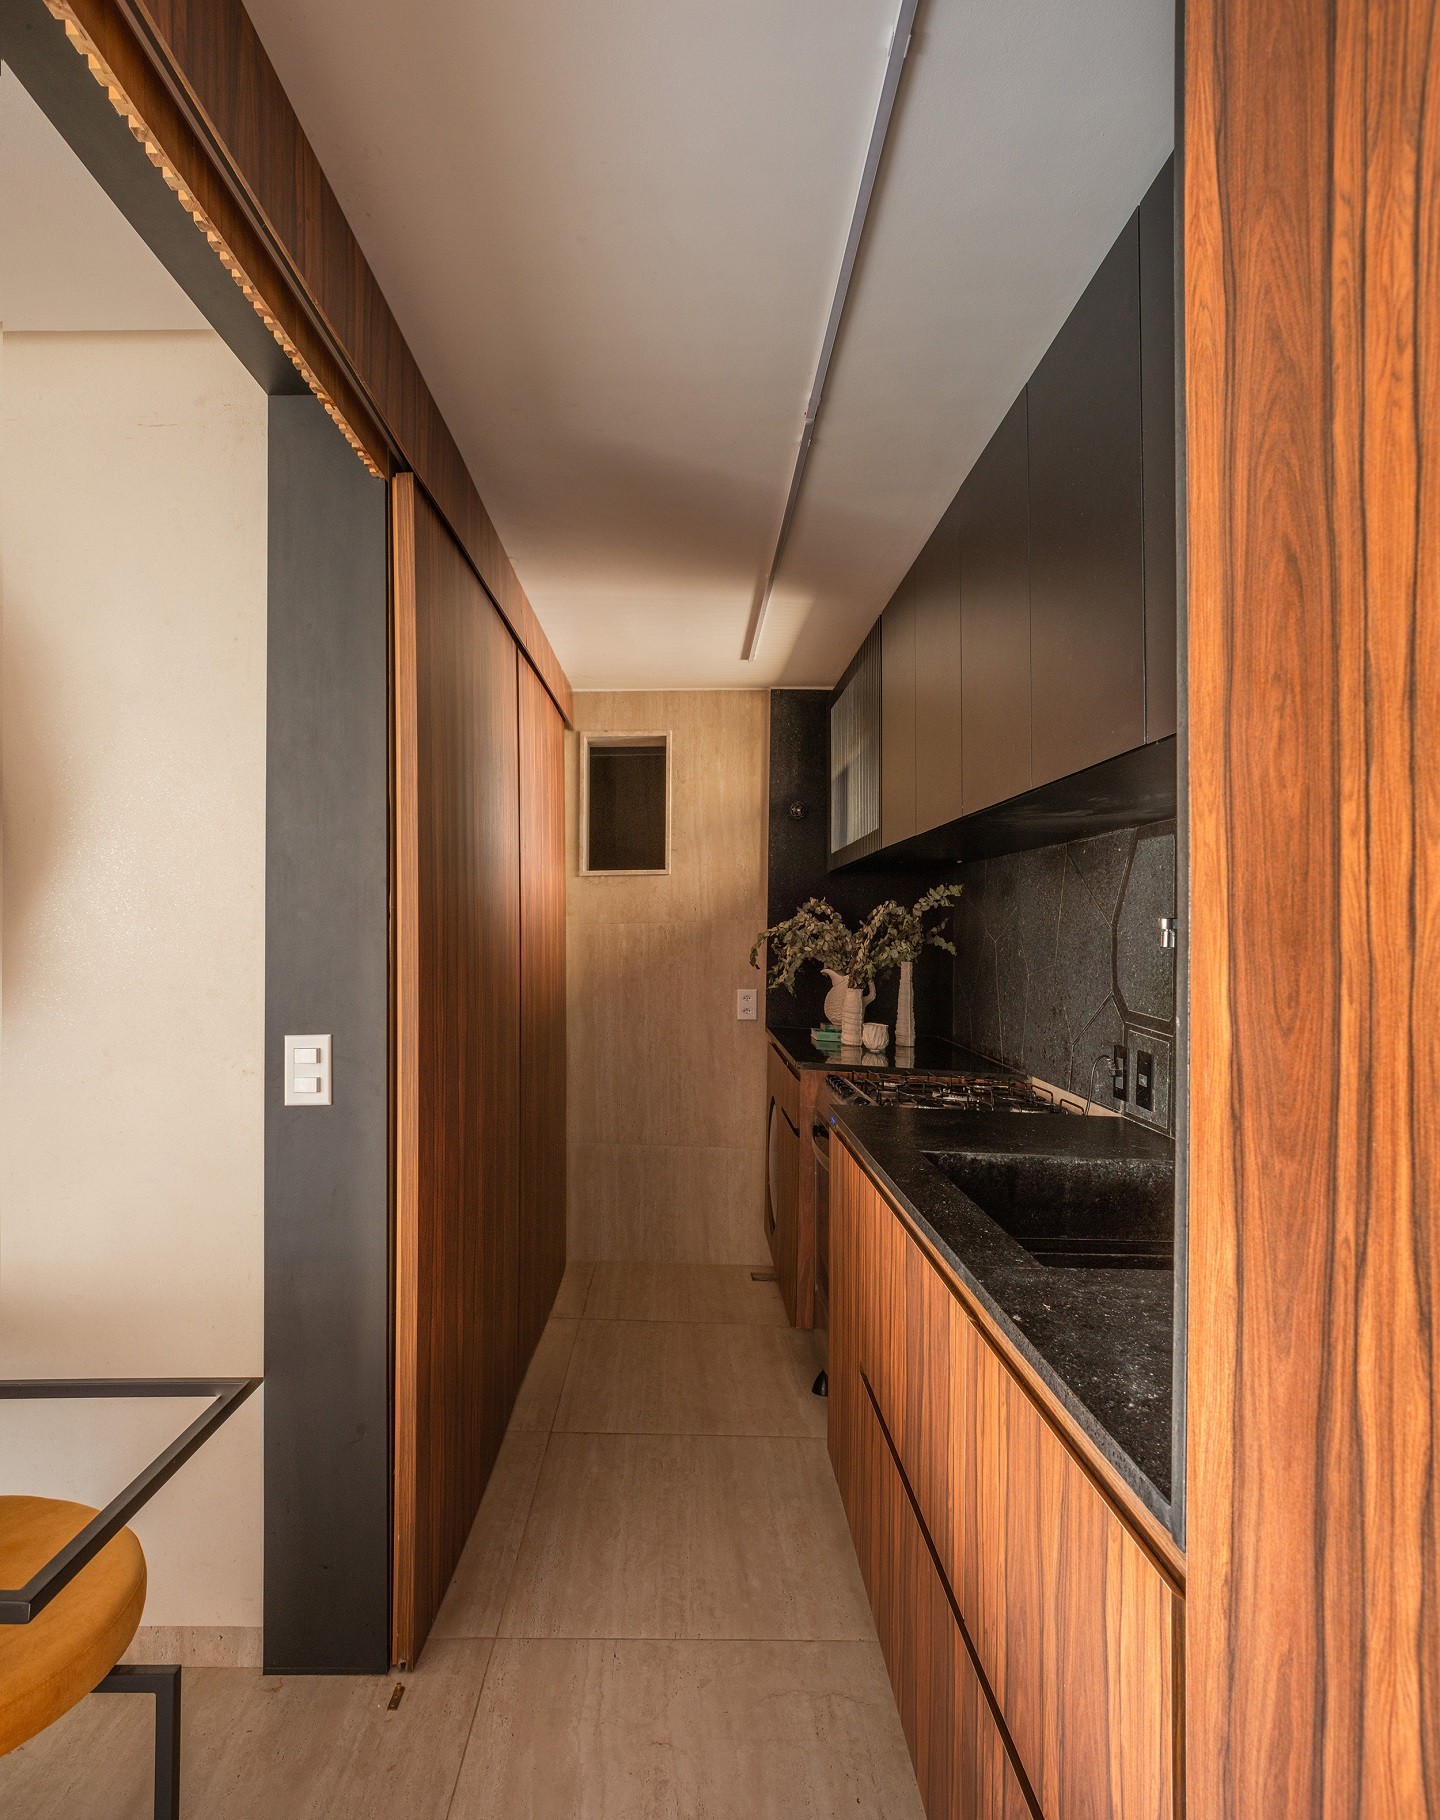 Apartamento de 80 m² combina aspecto minimalista com obras de arte (Foto: Jesus Pérez )